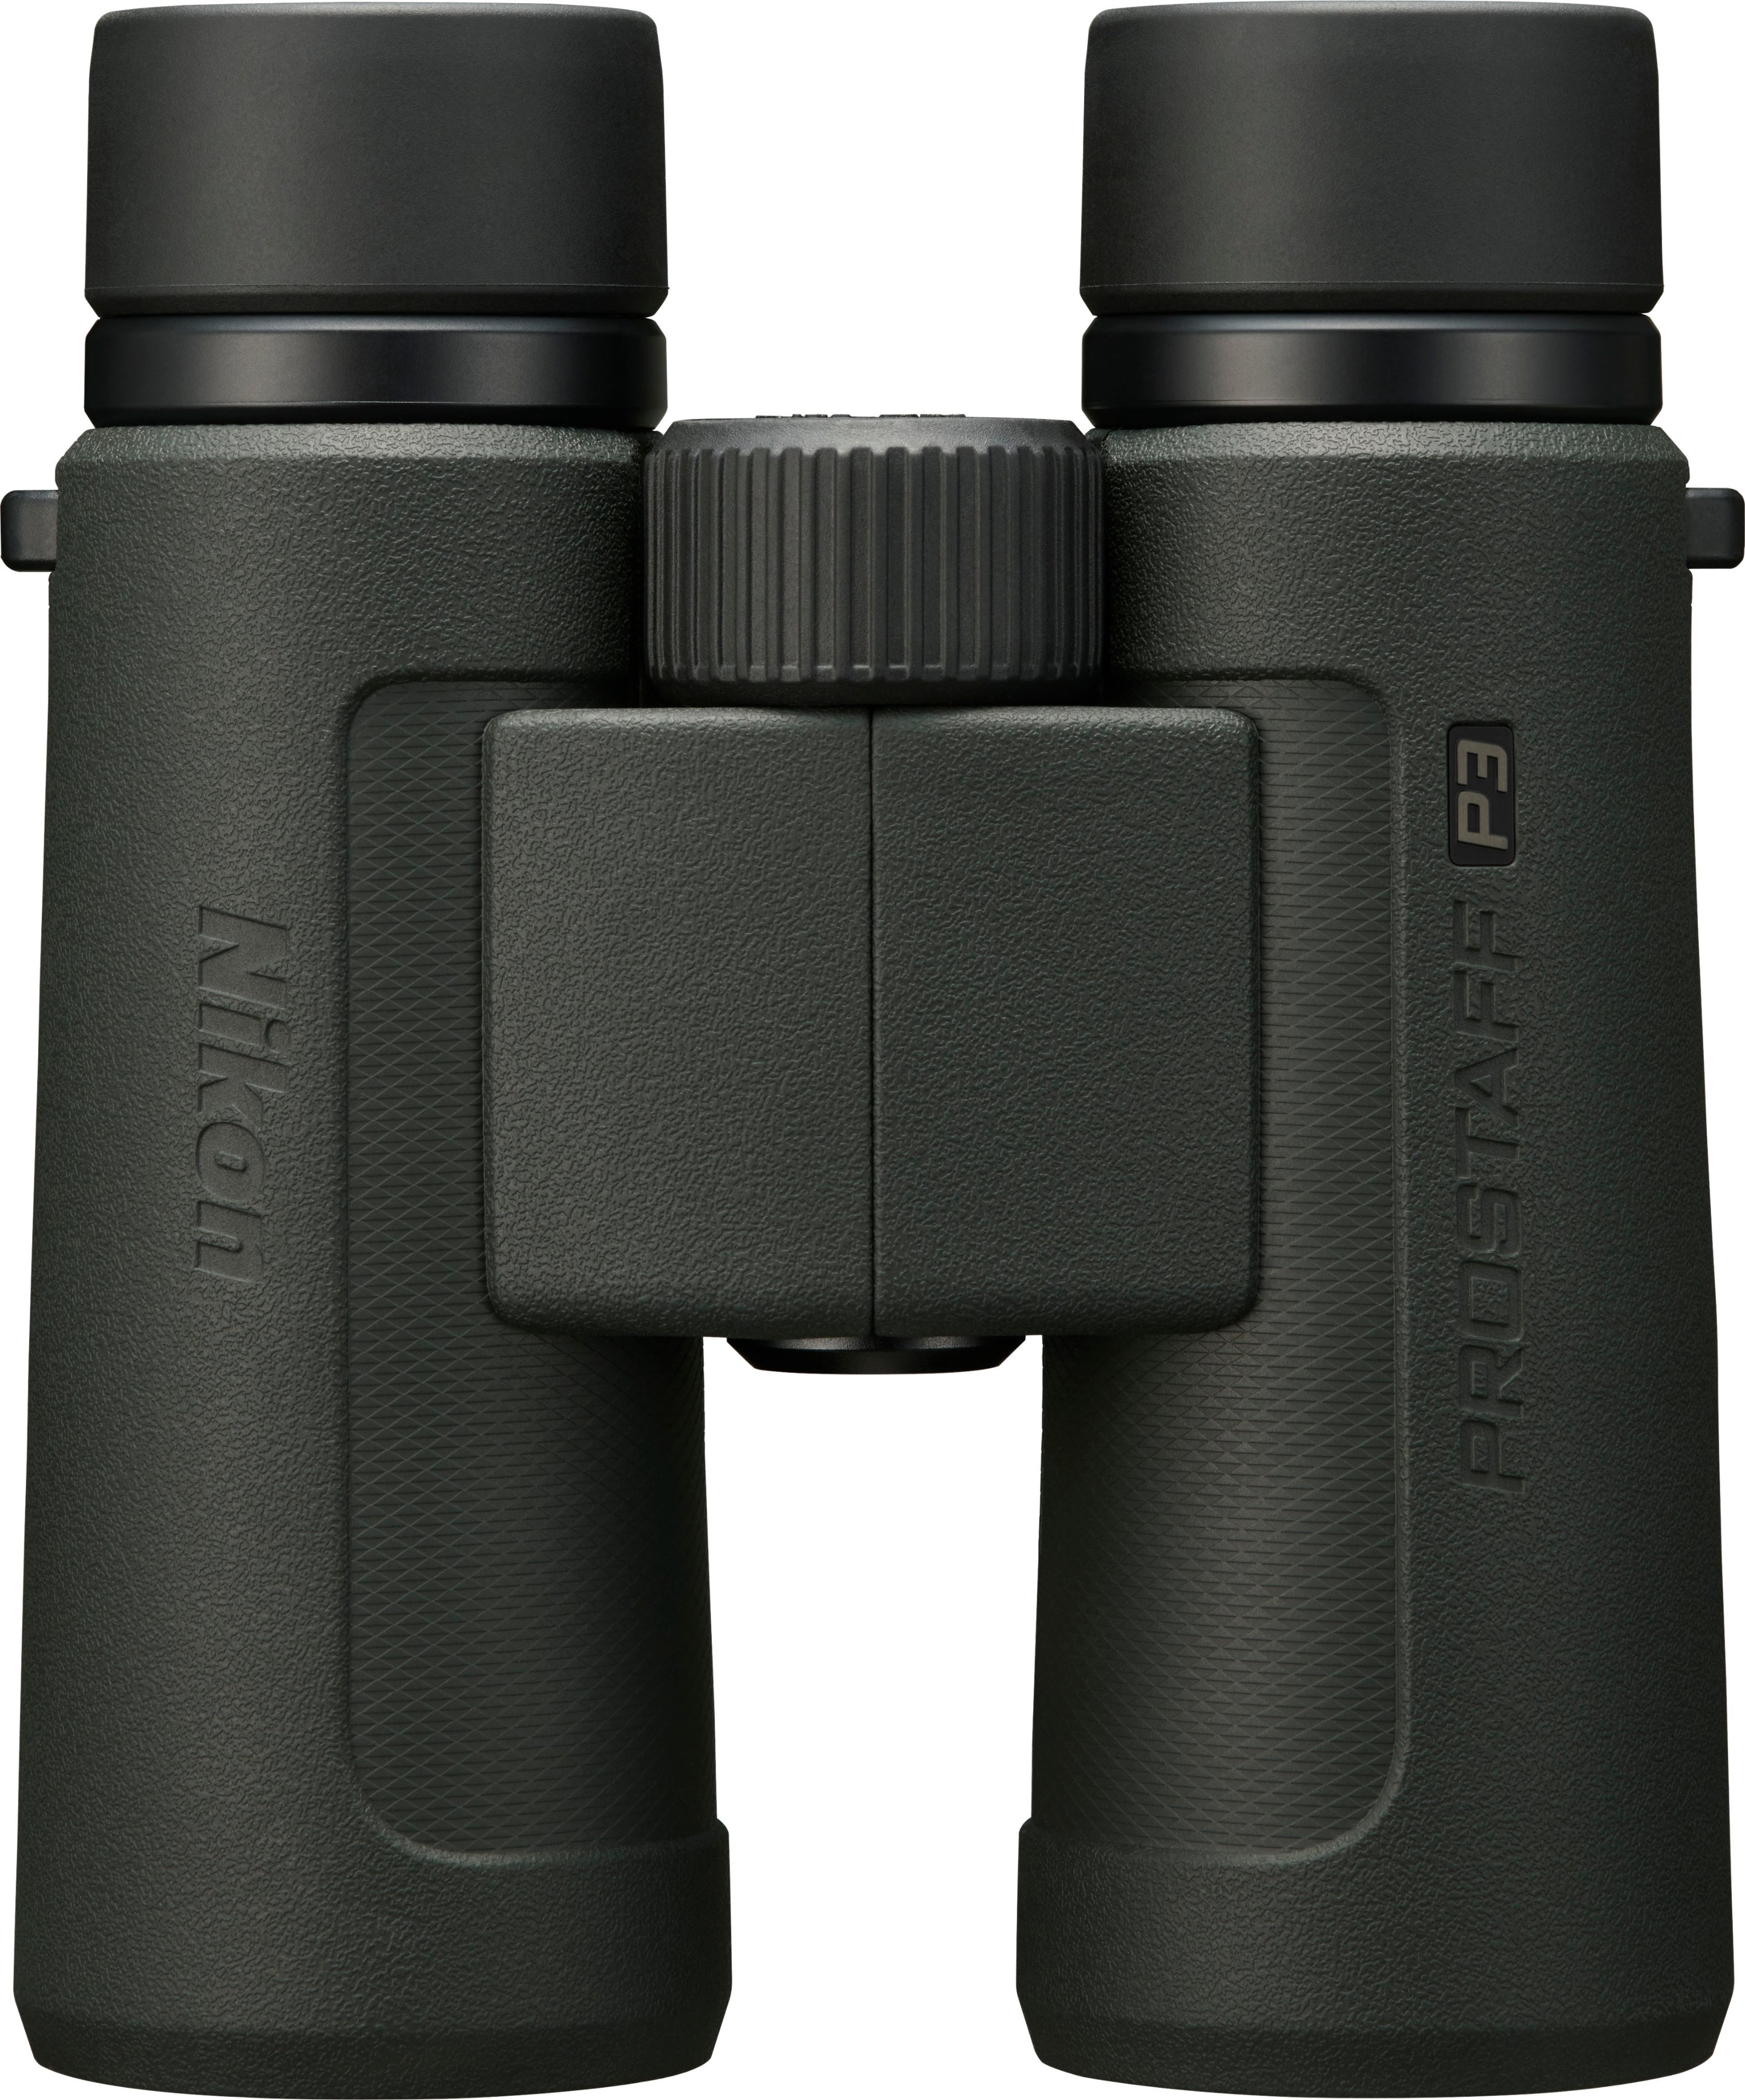 Angle View: Nikon - PROSTAFF P3 8X42 Waterproof Binoculars - Green